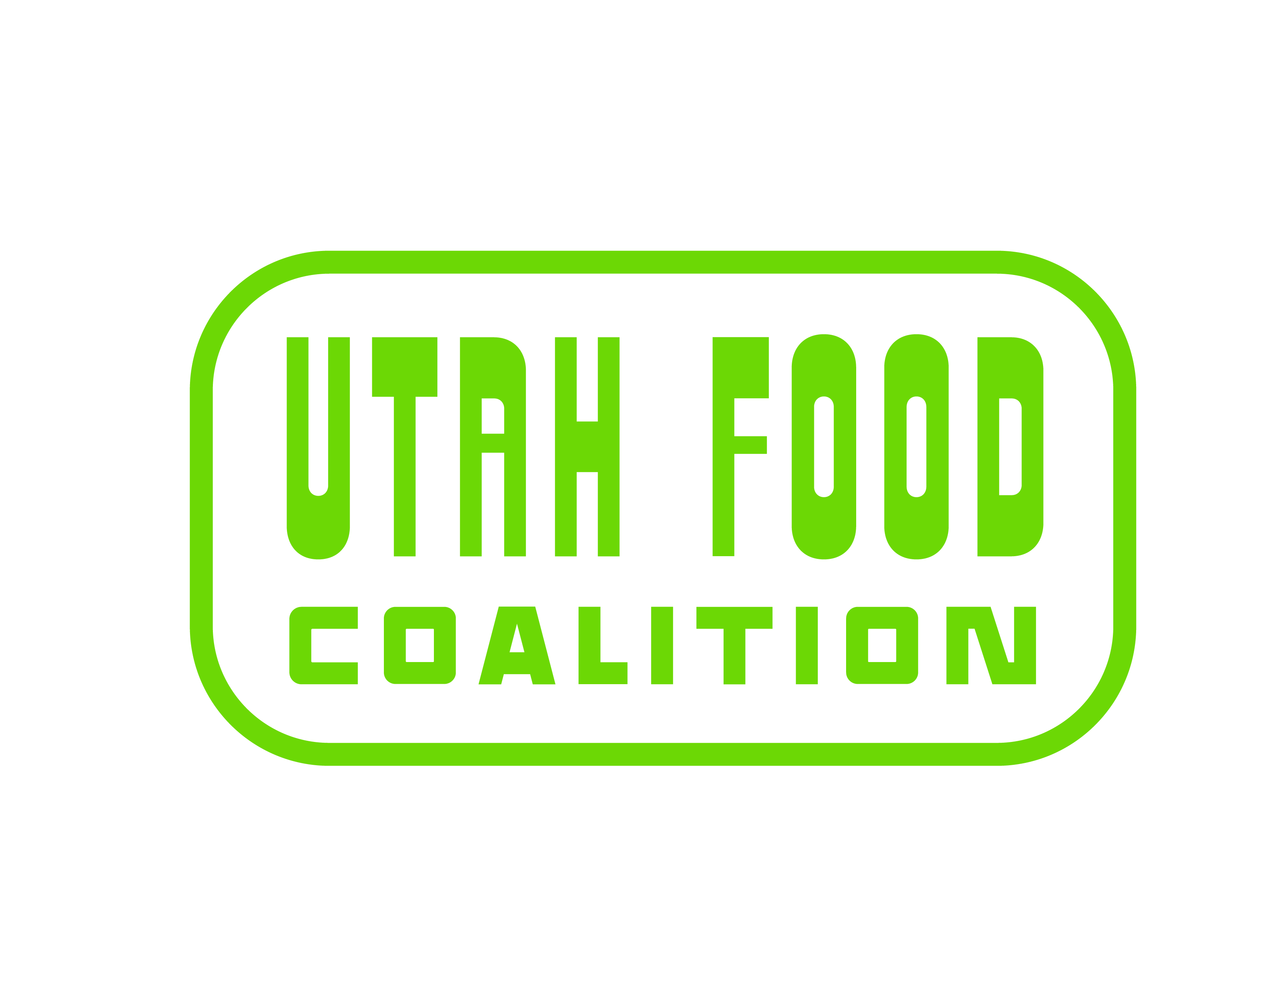 Utah Food Coalition Newsletter